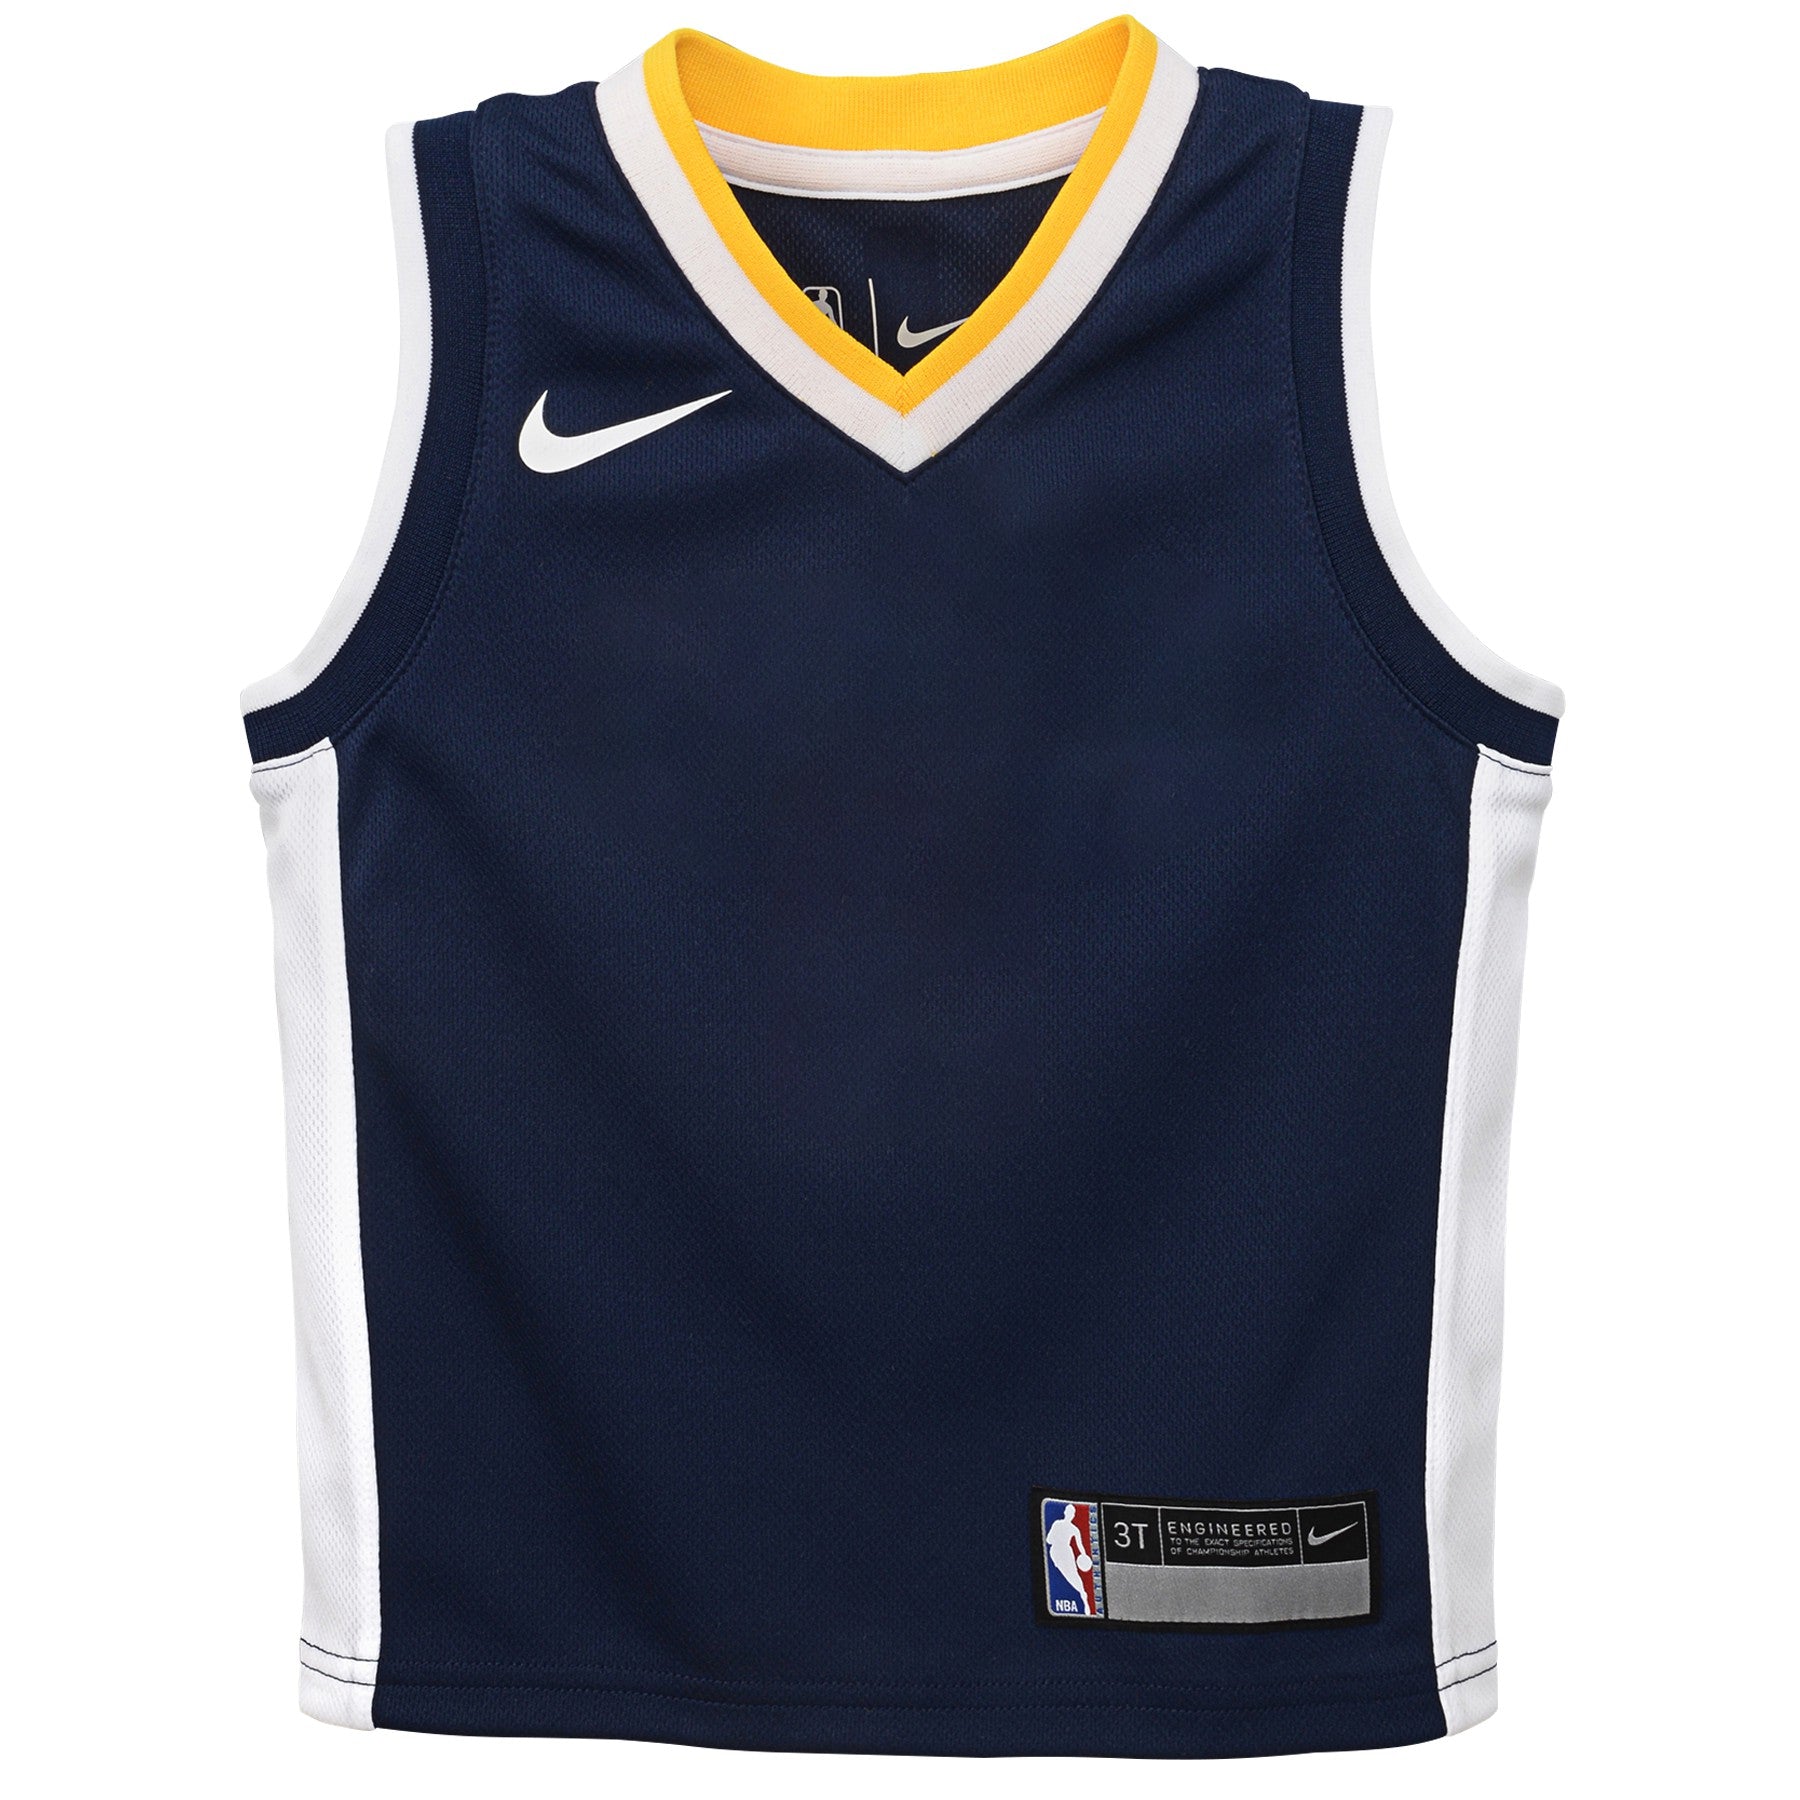 Youth NBA Replica Reversible Basketball Jersey - All Sports Uniforms